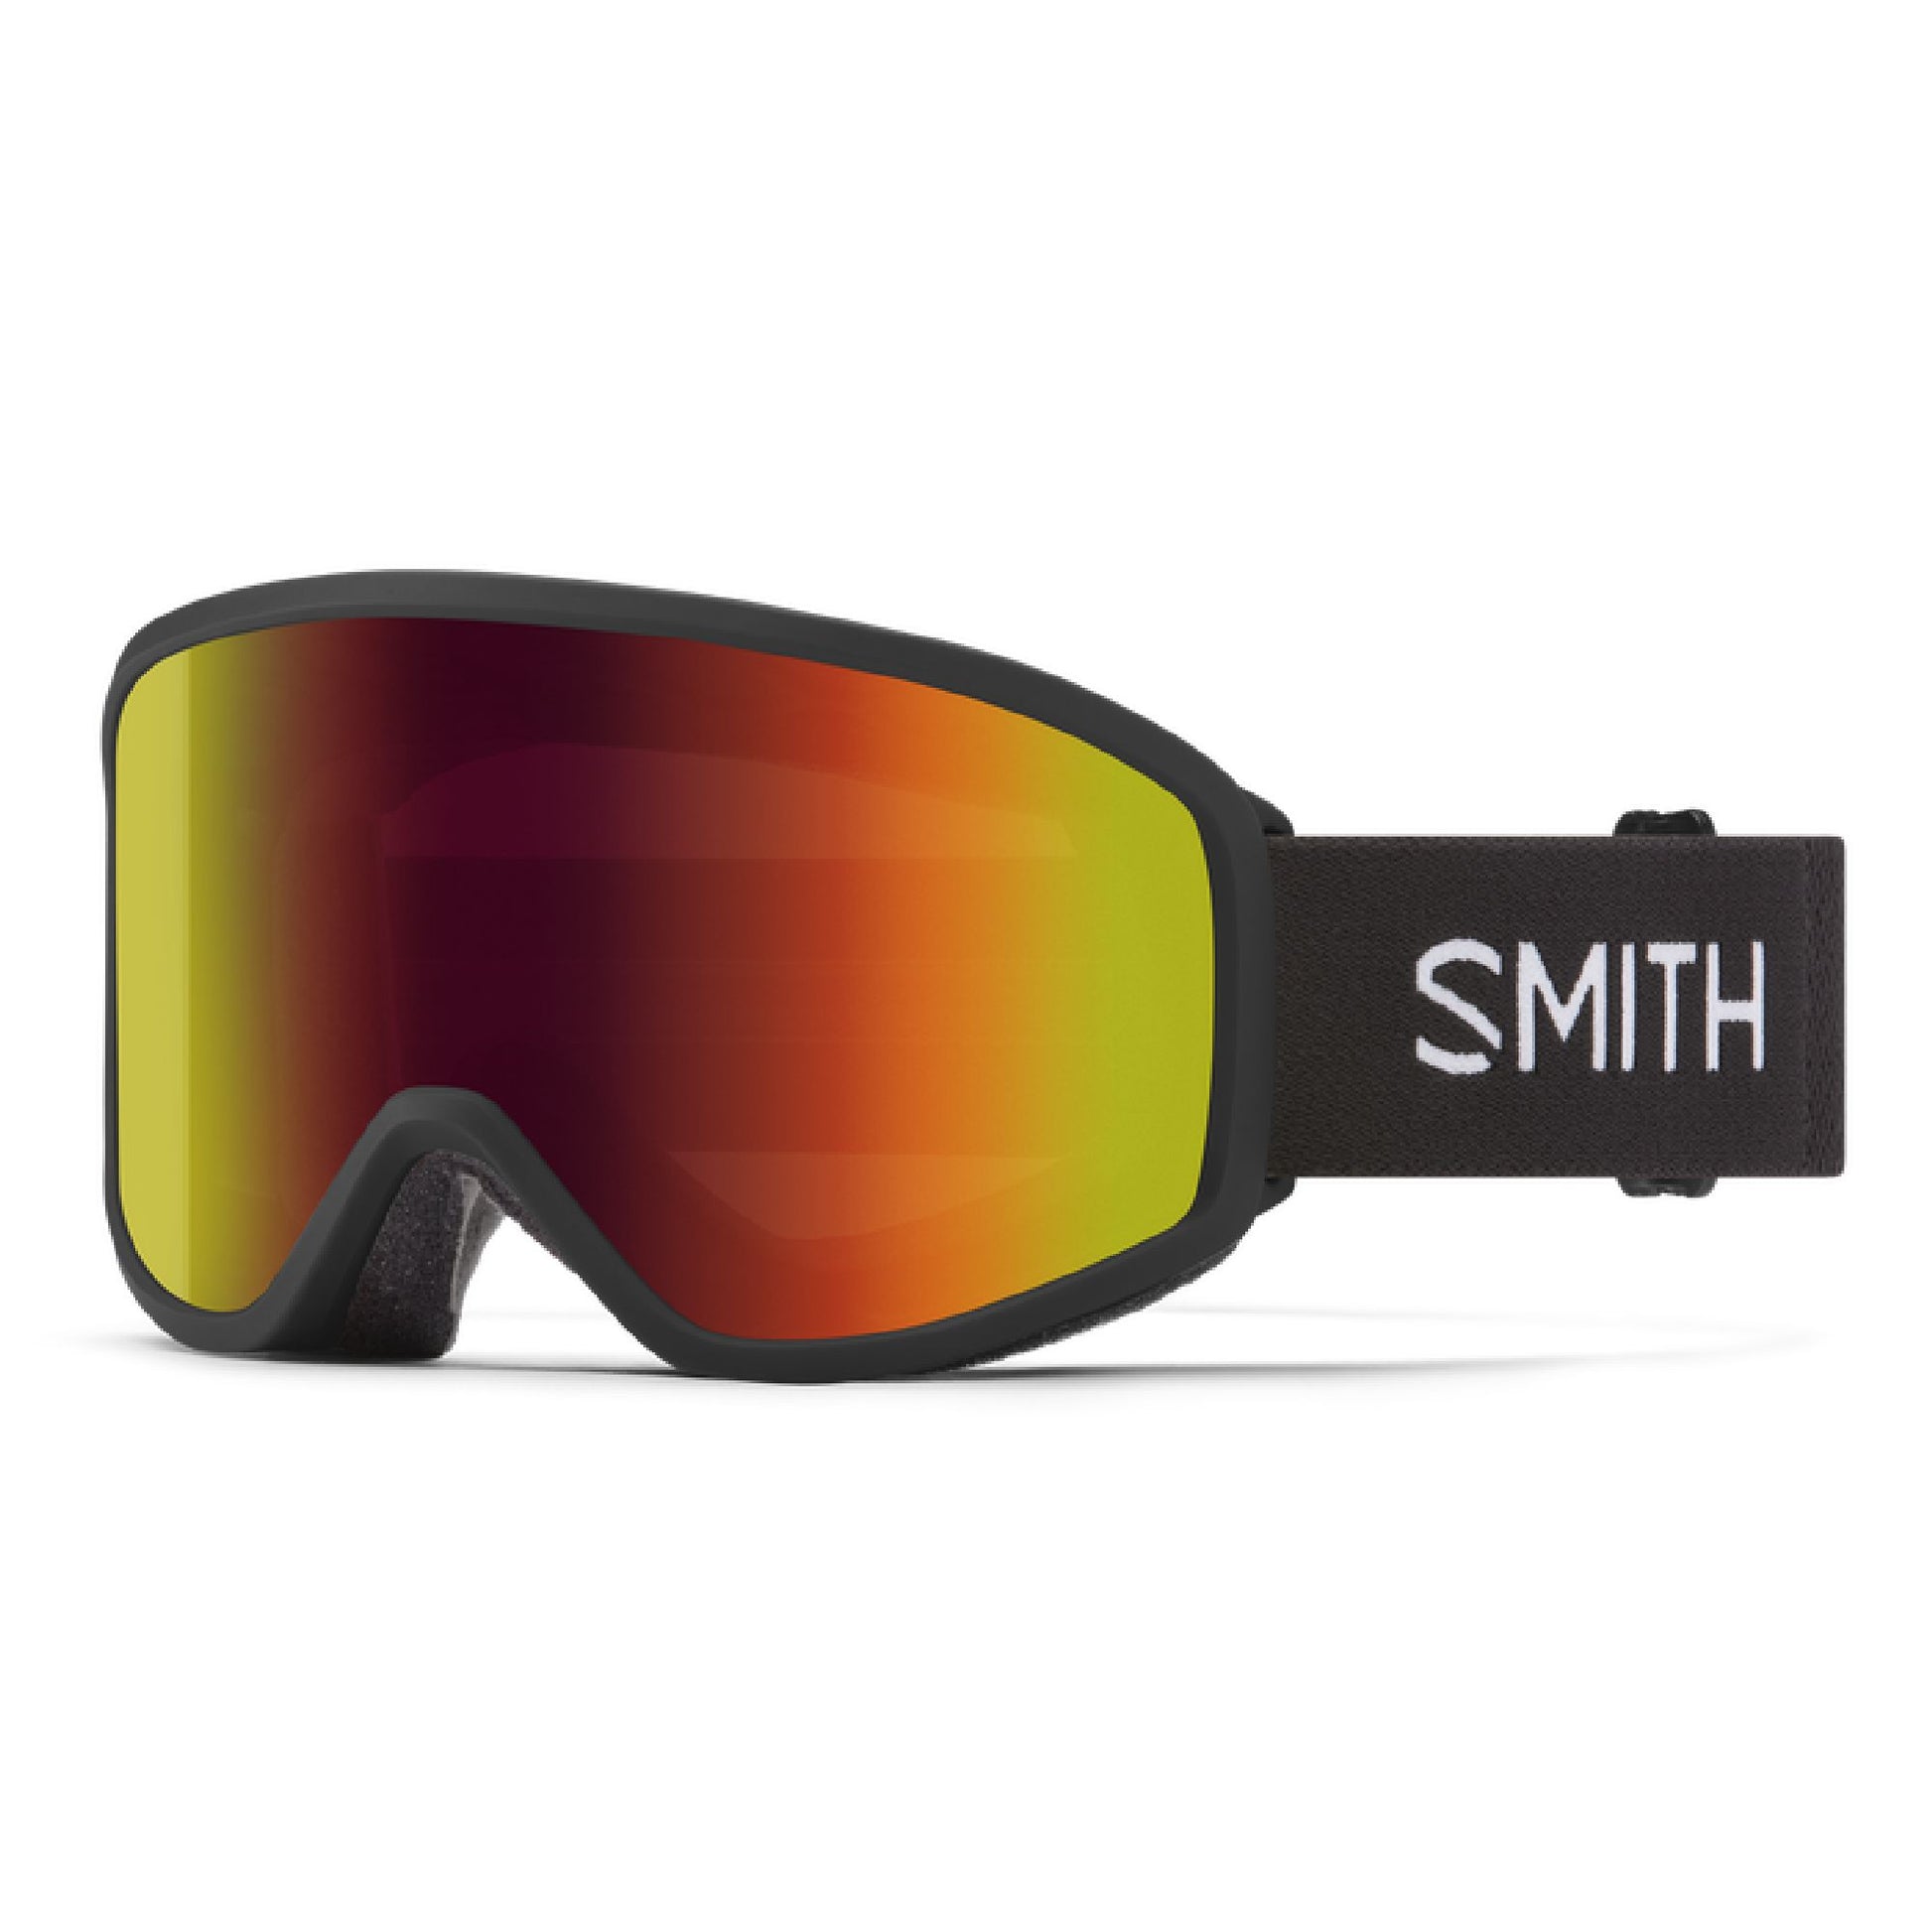 Smith Reason OTG Low Bridge Fit Snow Goggle Black / Red Sol-X Mirror Snow Goggles